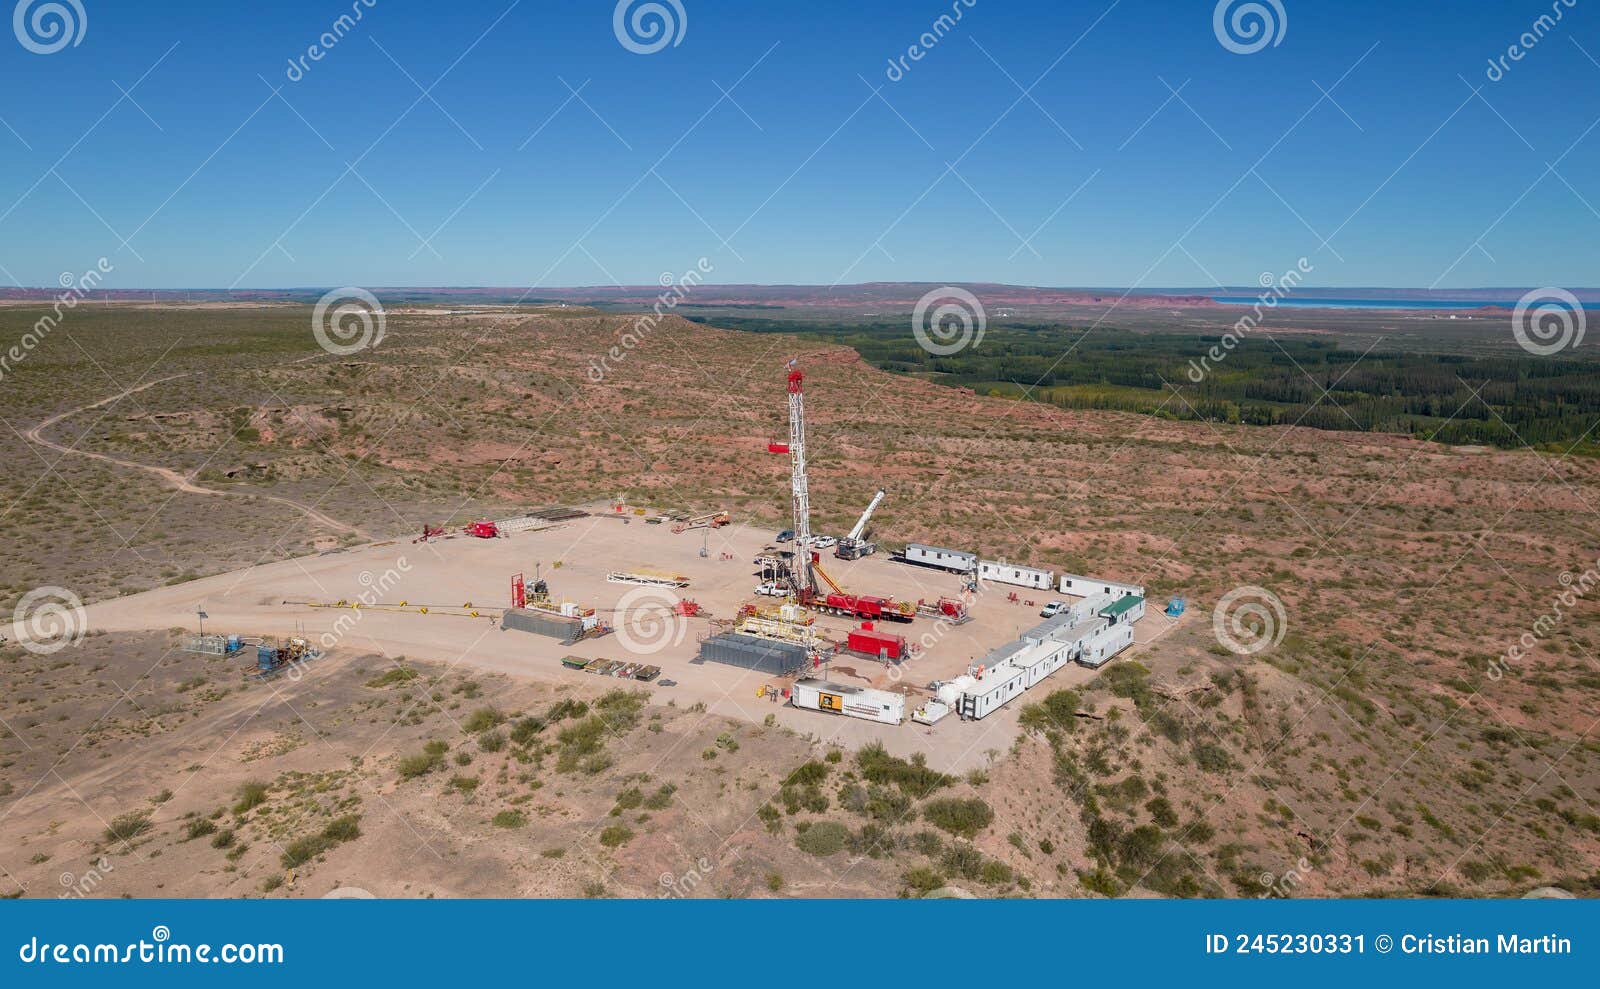 pulling equipment. oil well maintenance in vaca muerta argentina